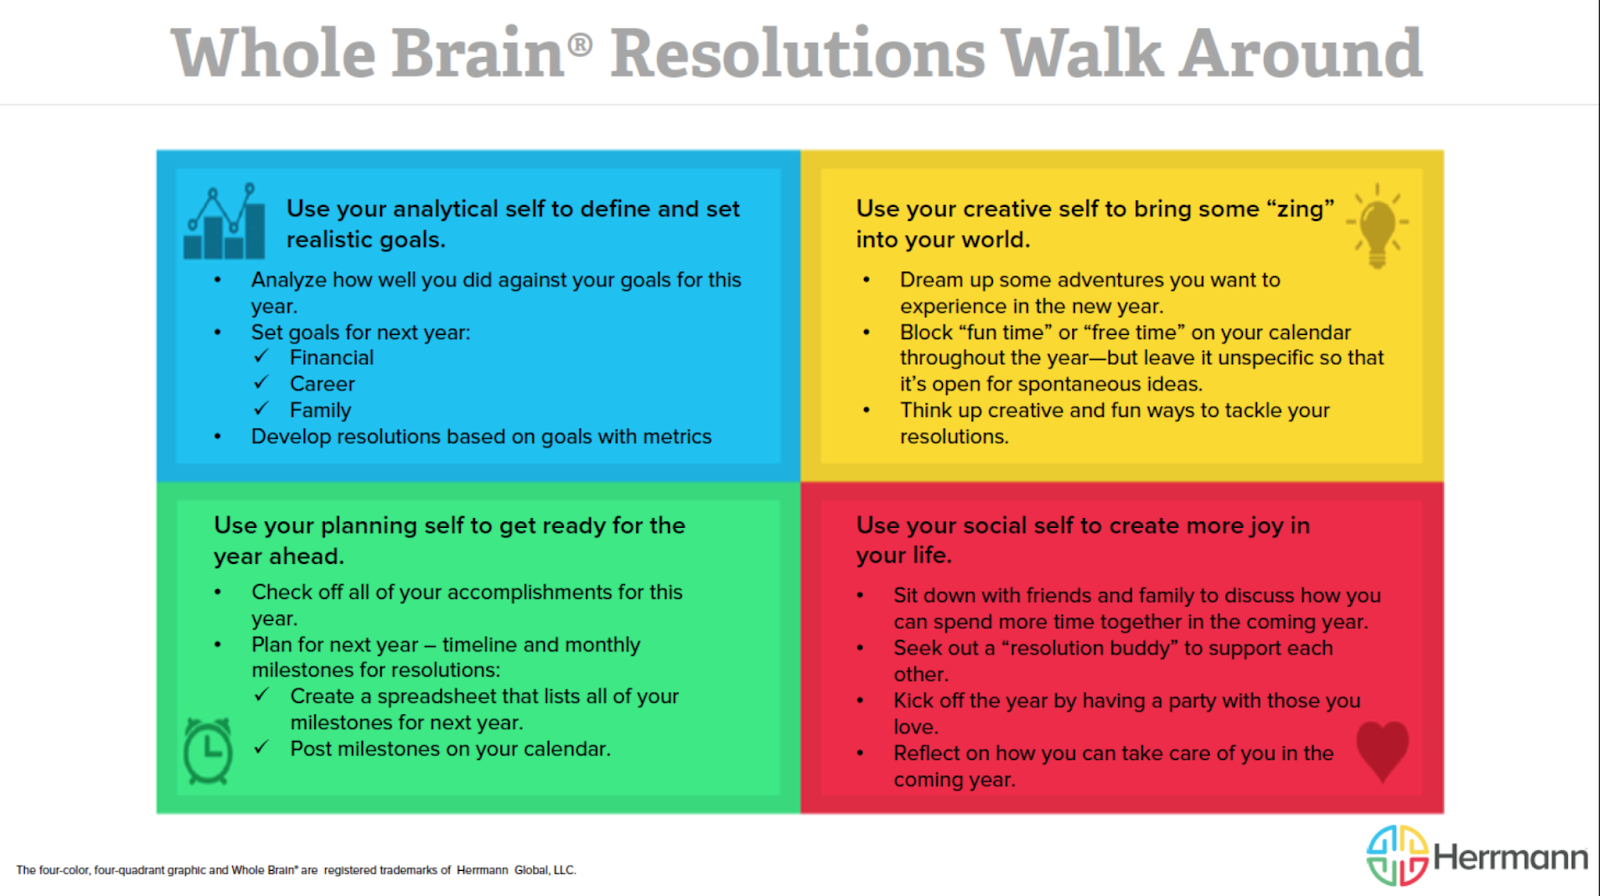 Whole Brain Resolutions Walk Around